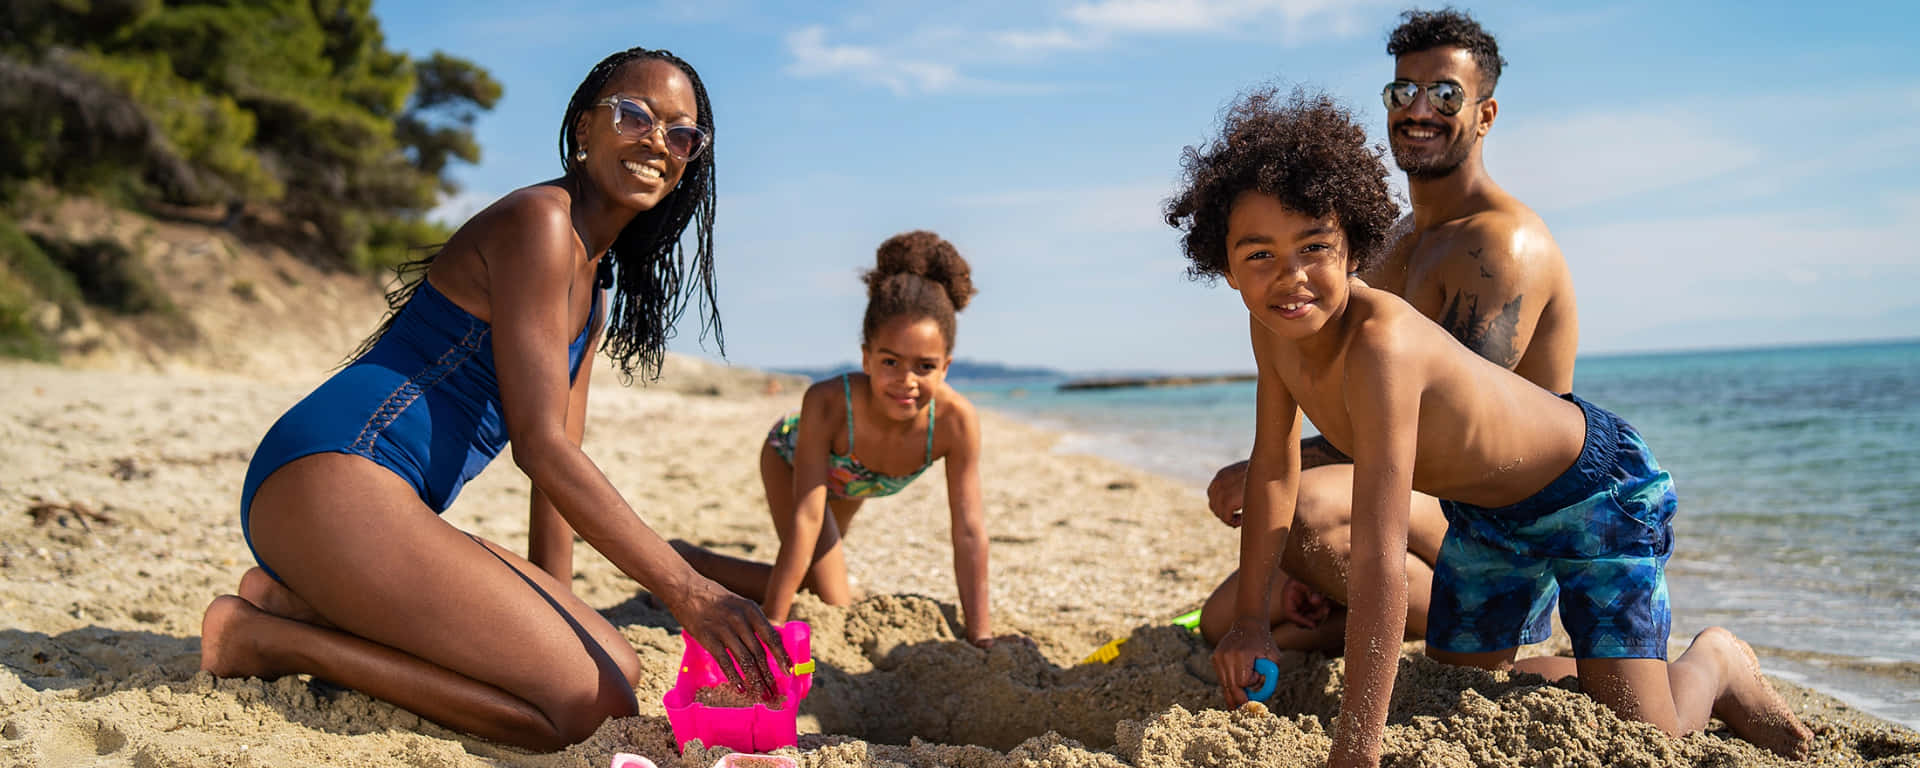 Whole-hearted Bonding - A Beach Family Sharing a Joyful Moment